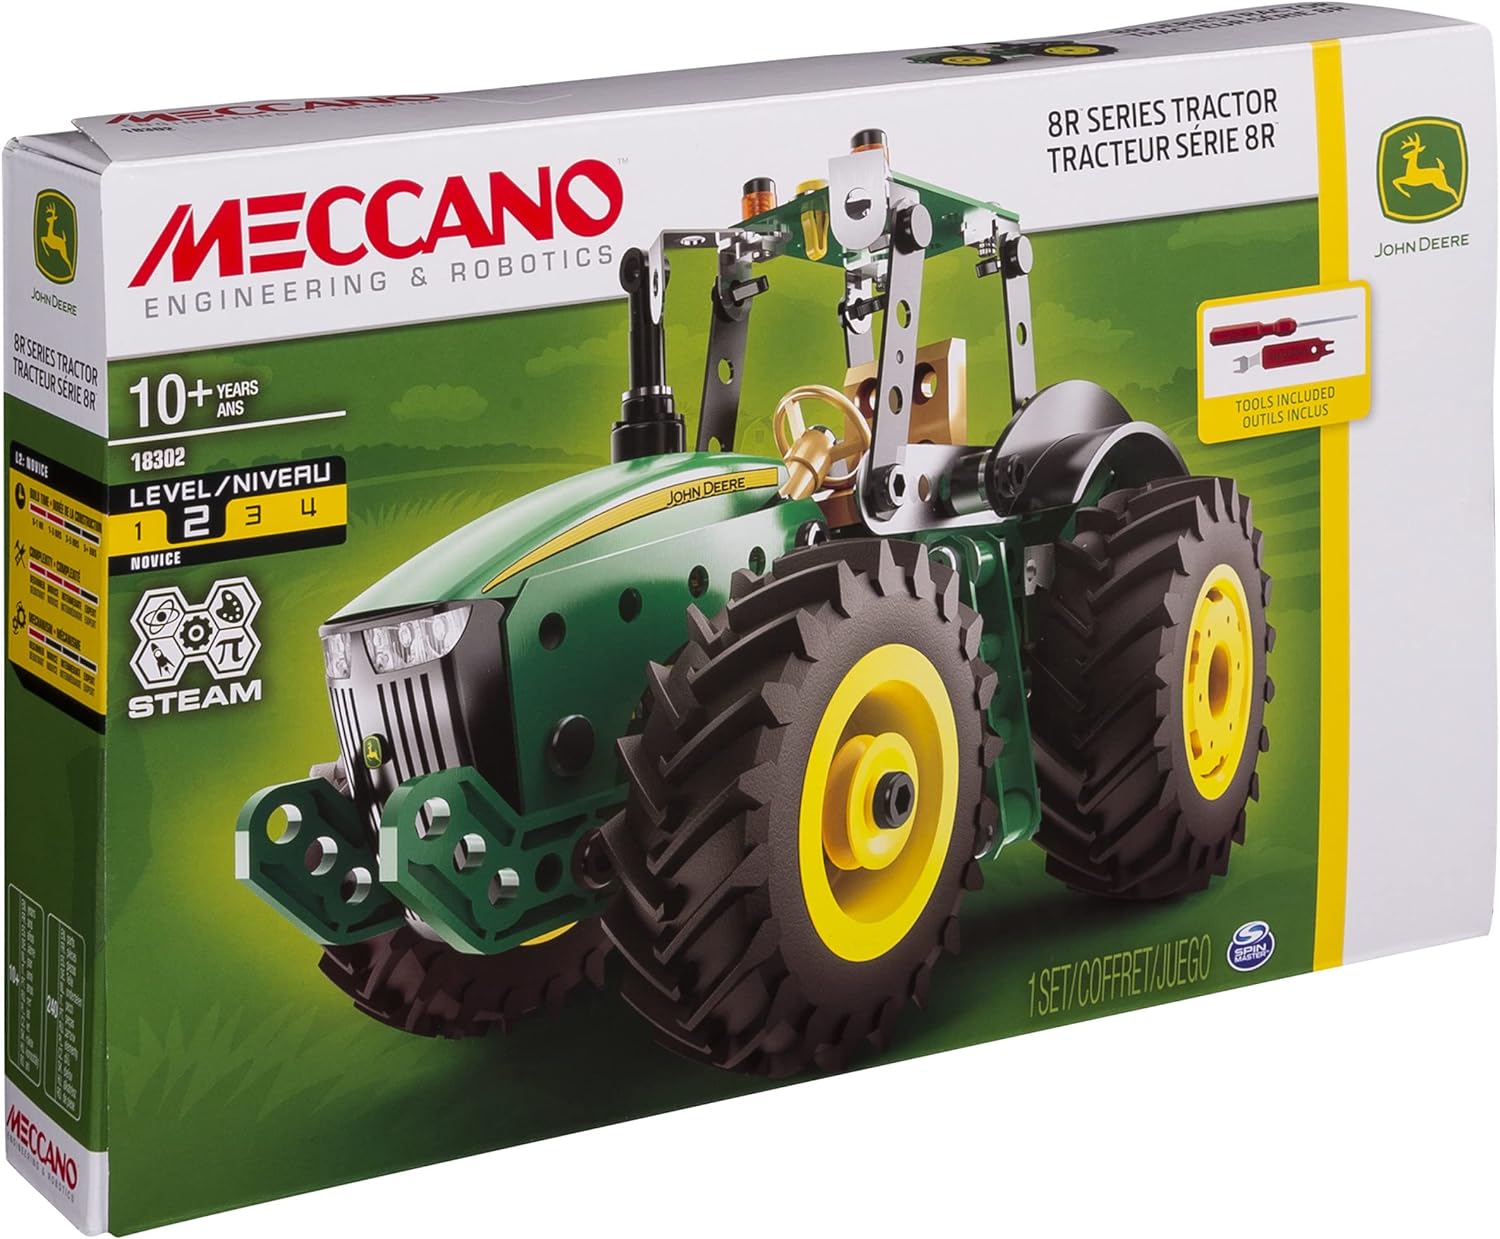 Meccano Set 18302 John Deere 8R Series Tractor Engineering & Robotics Steam